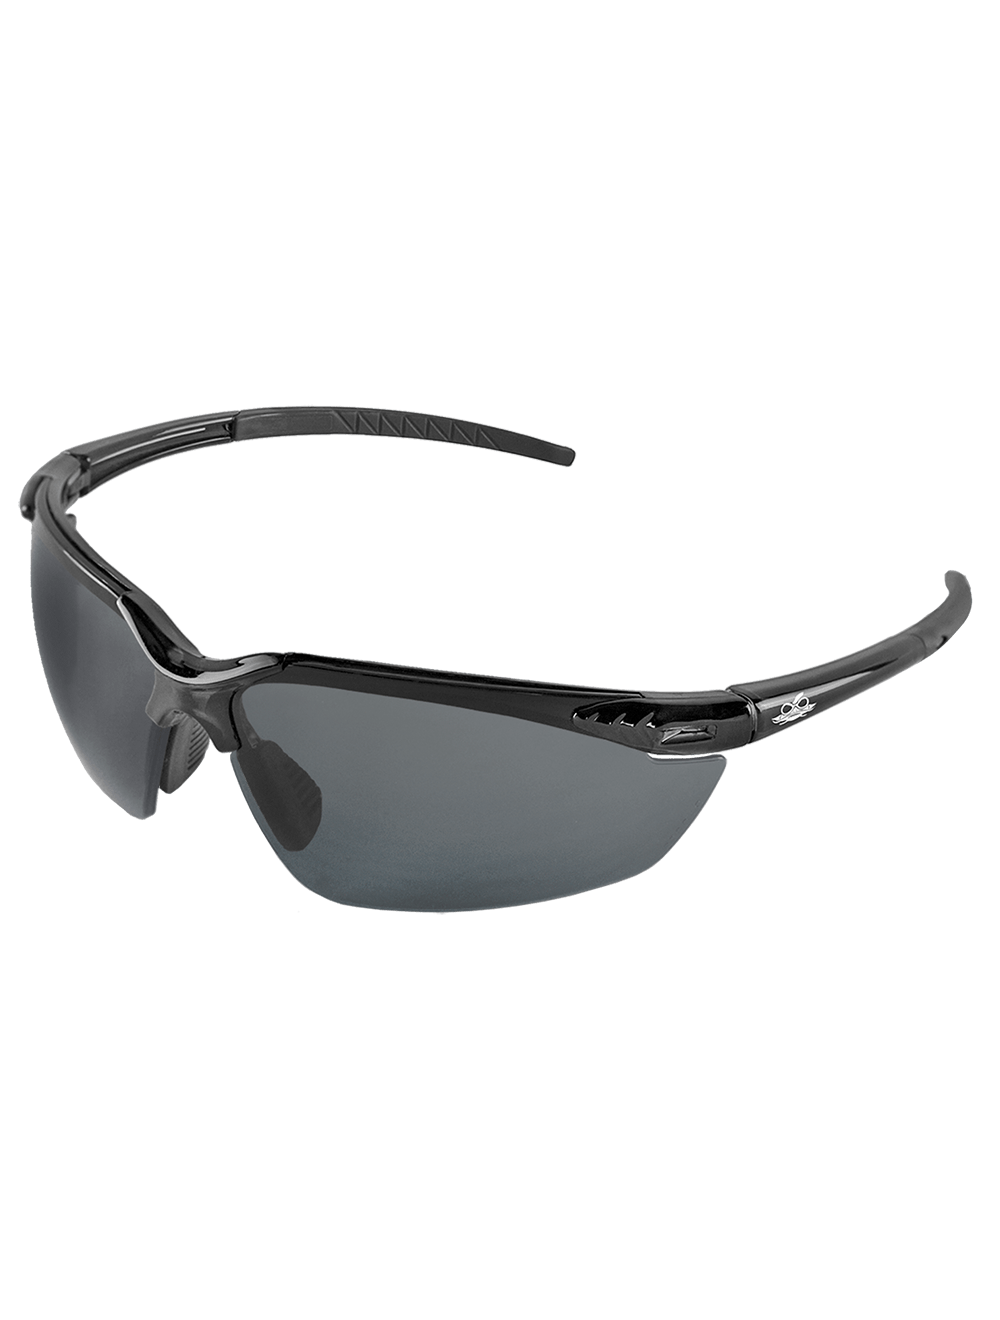 Mojarra® Dark Smoke Anti-Fog Lens, Crystal Black Frame Safety Glasses - BH1133AF